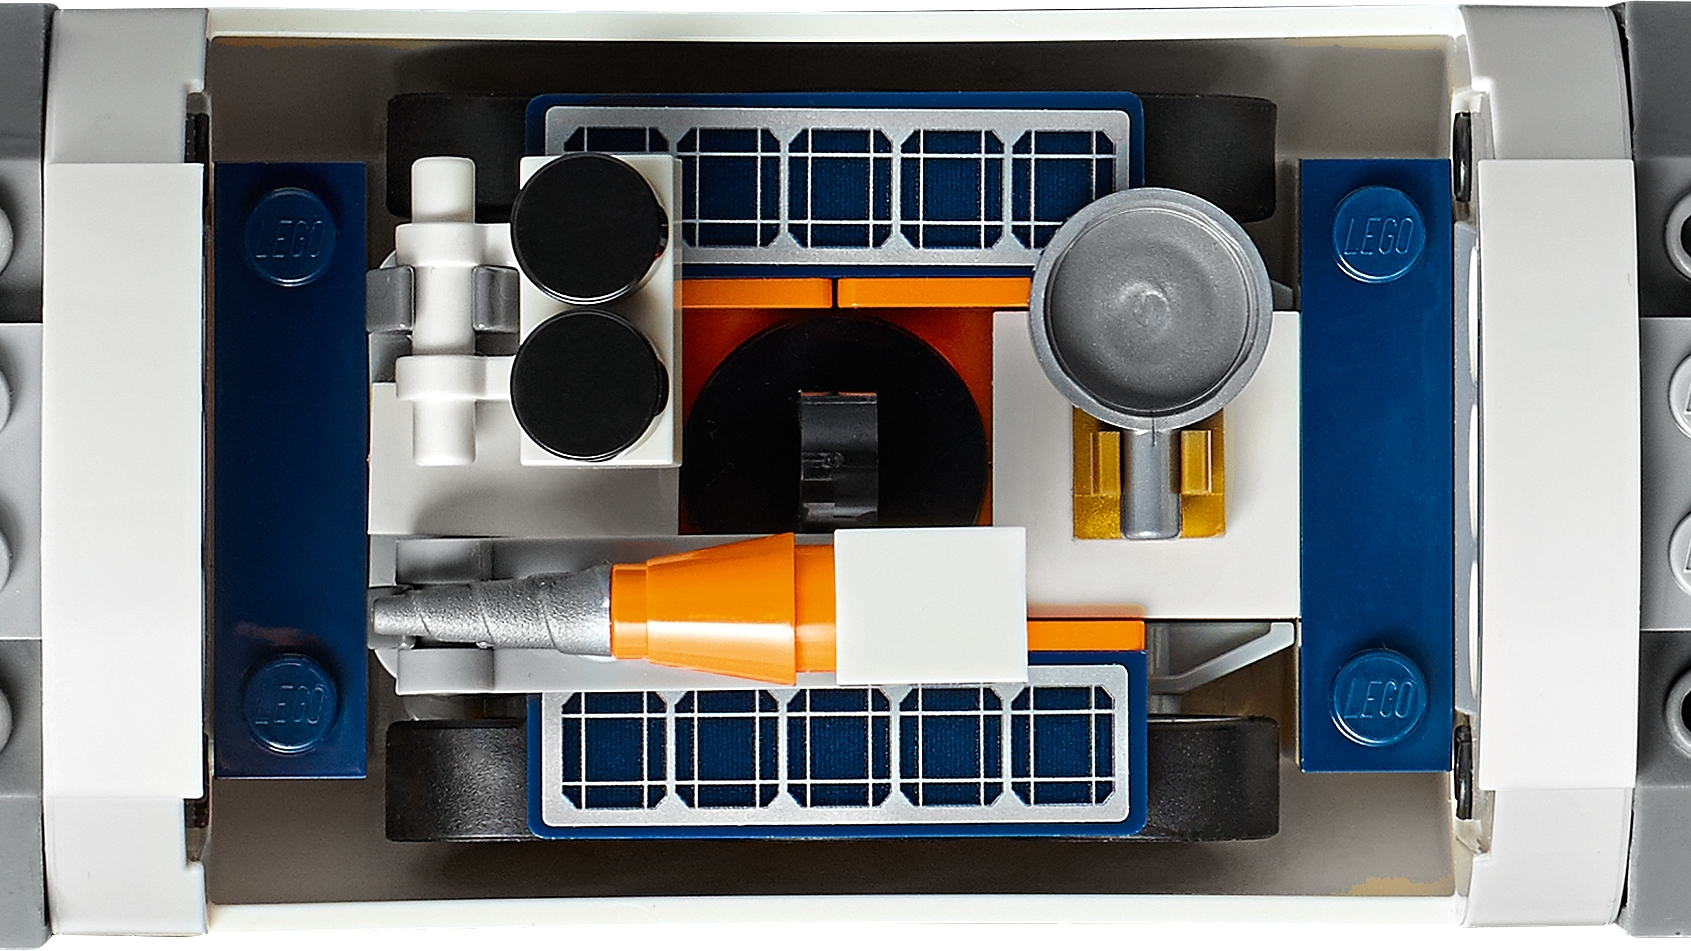 LEGO City Space Rocket Assembly & Transport 60229 Toy Set (1055 Pieces)